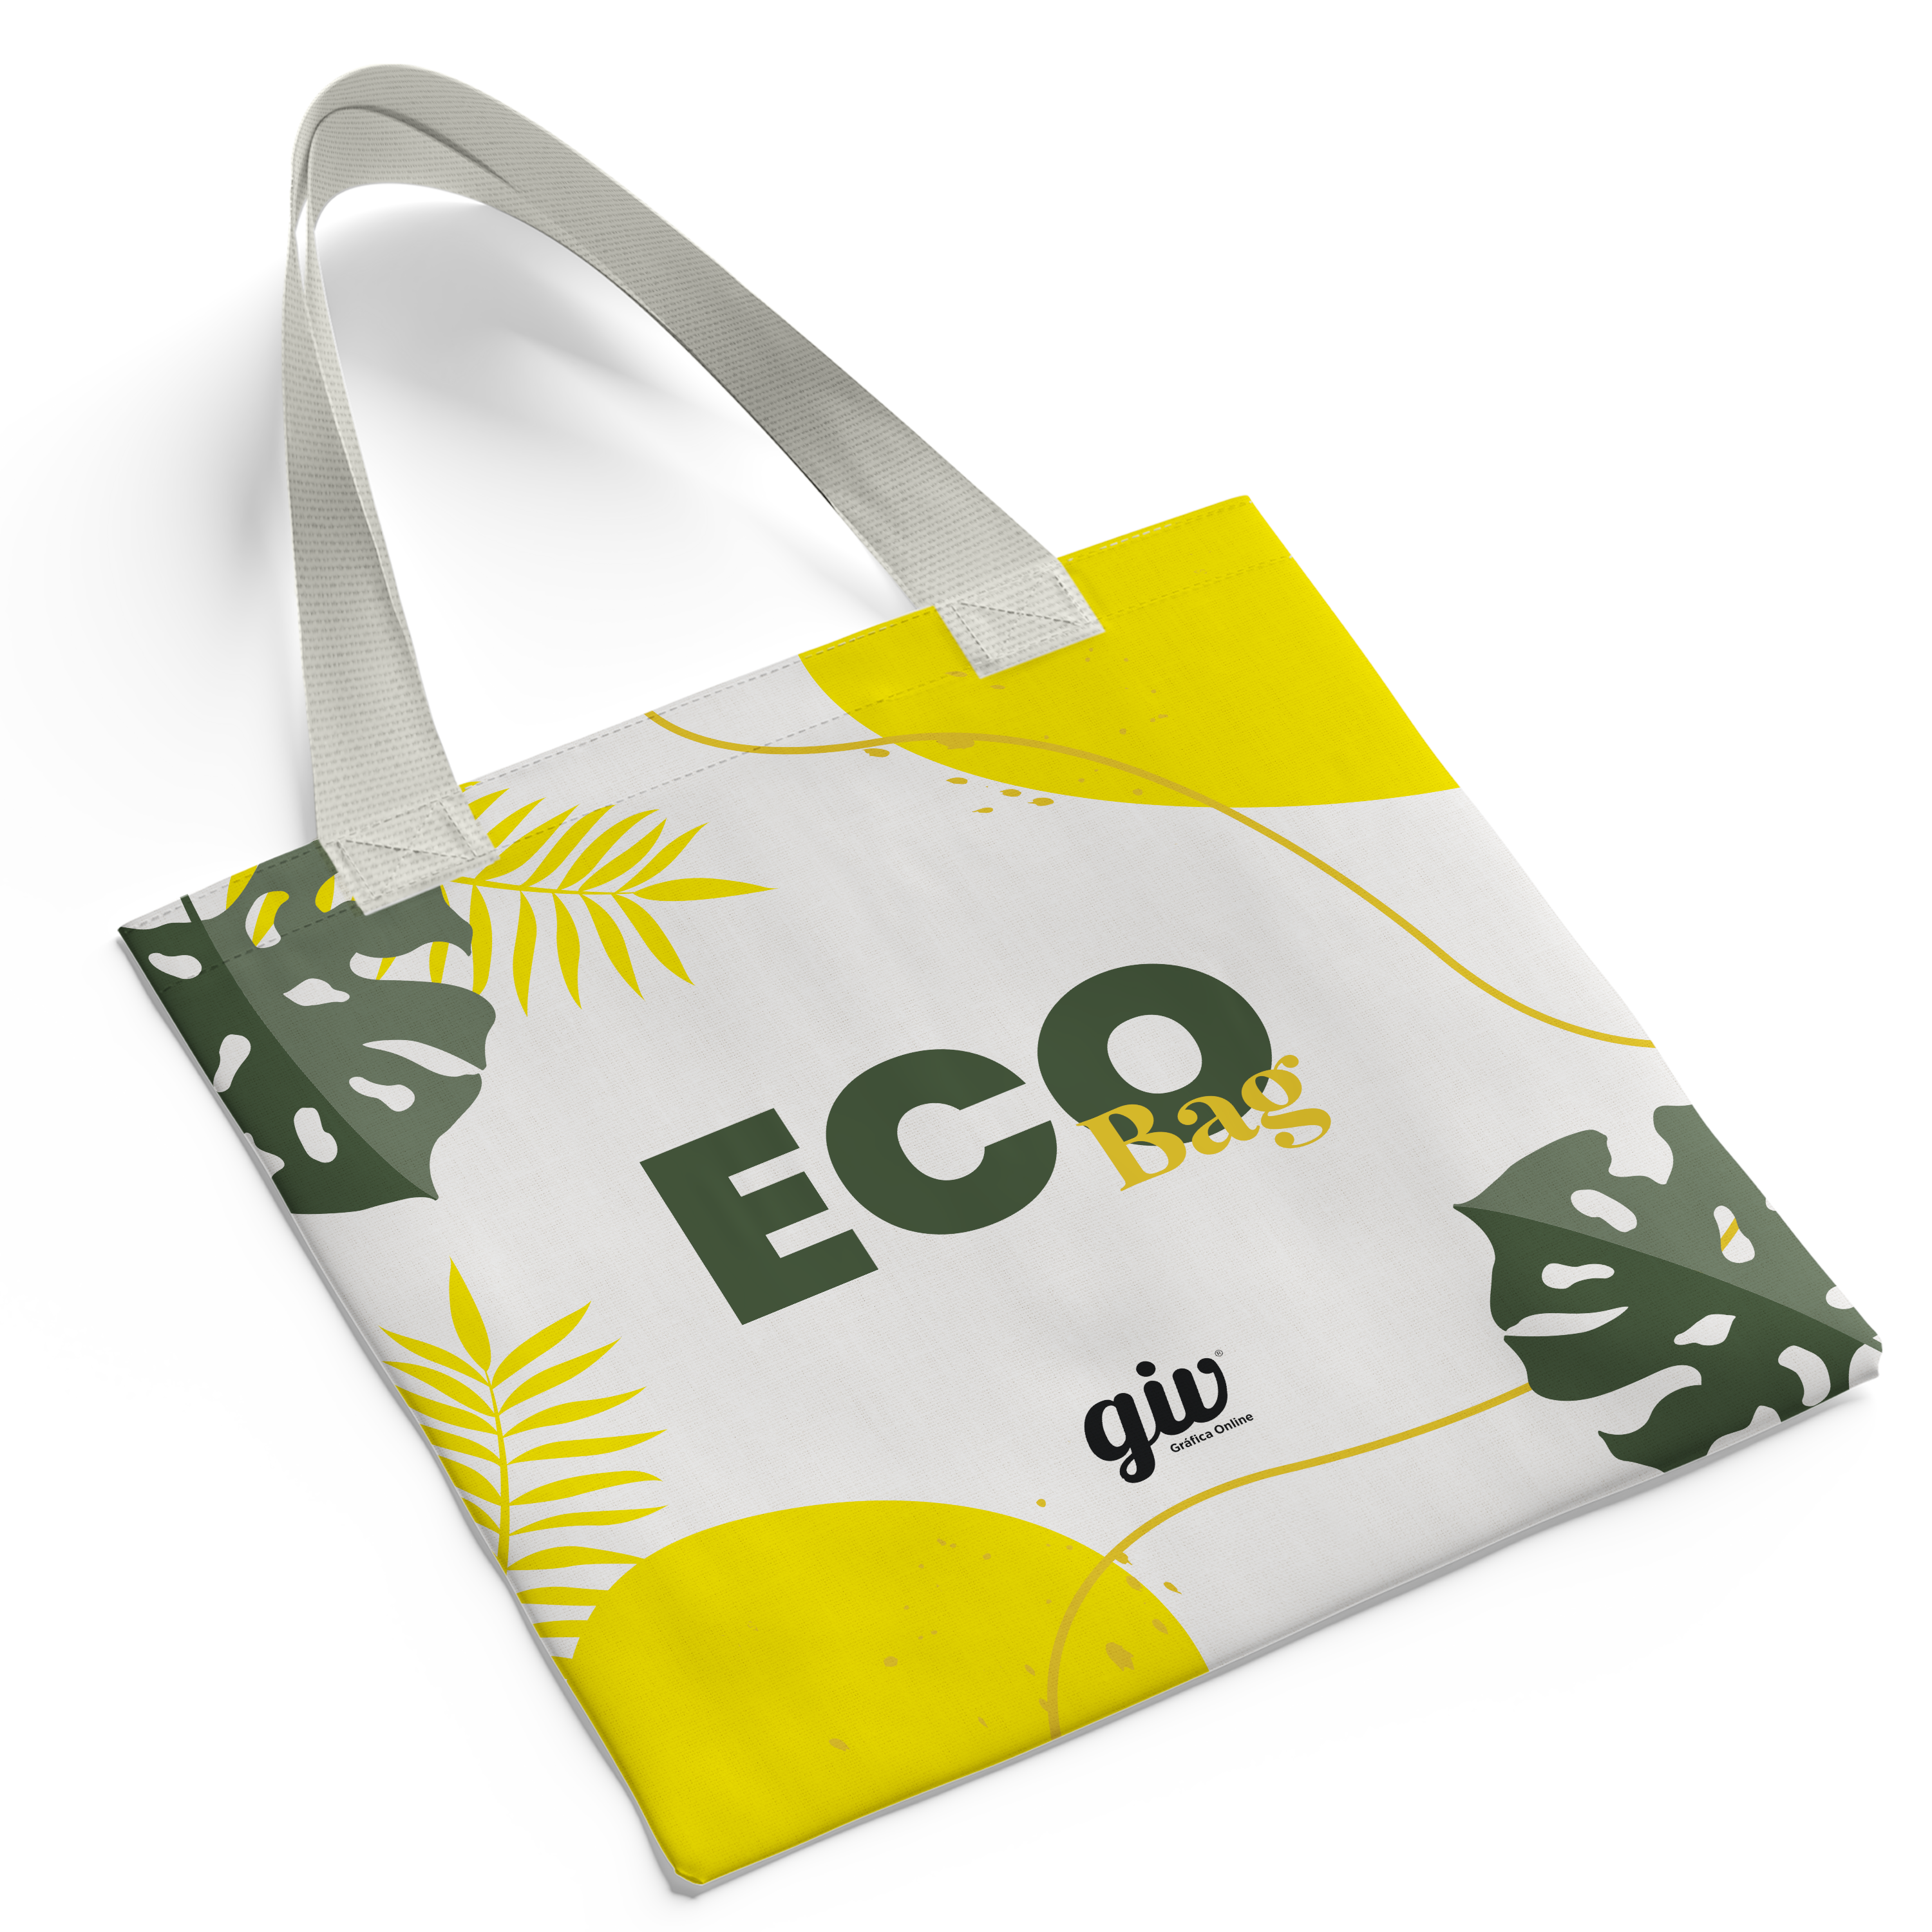 Sacola Ecobag Personalizada